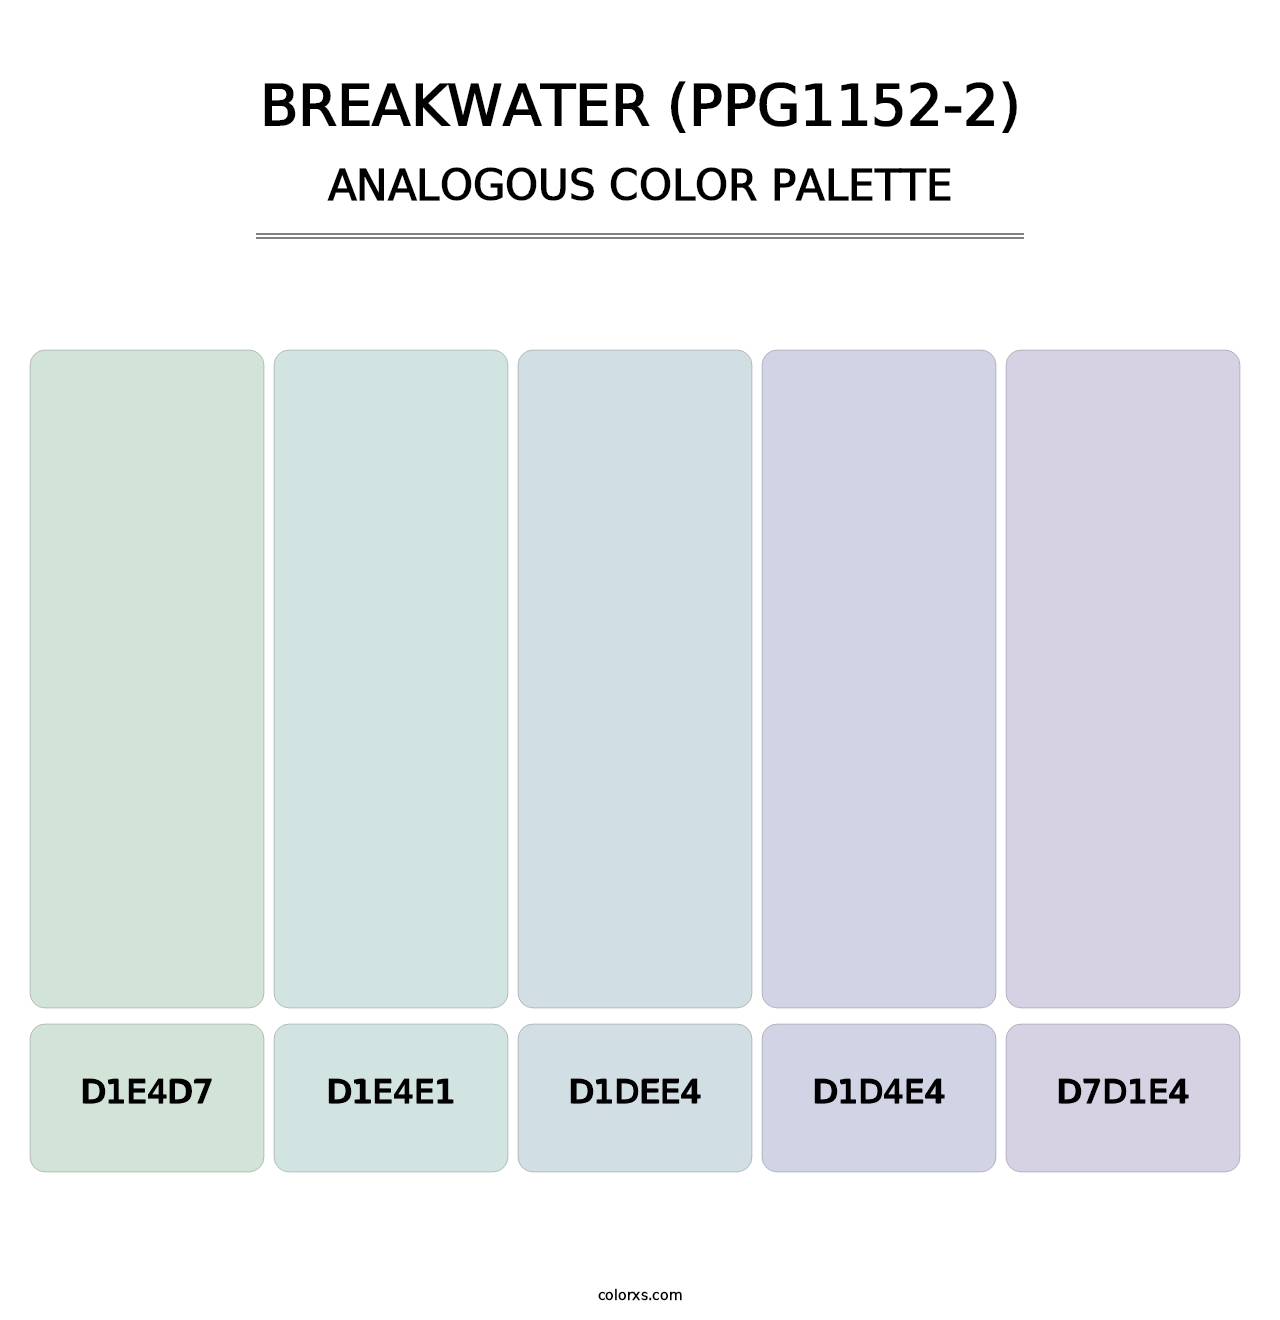 Breakwater (PPG1152-2) - Analogous Color Palette